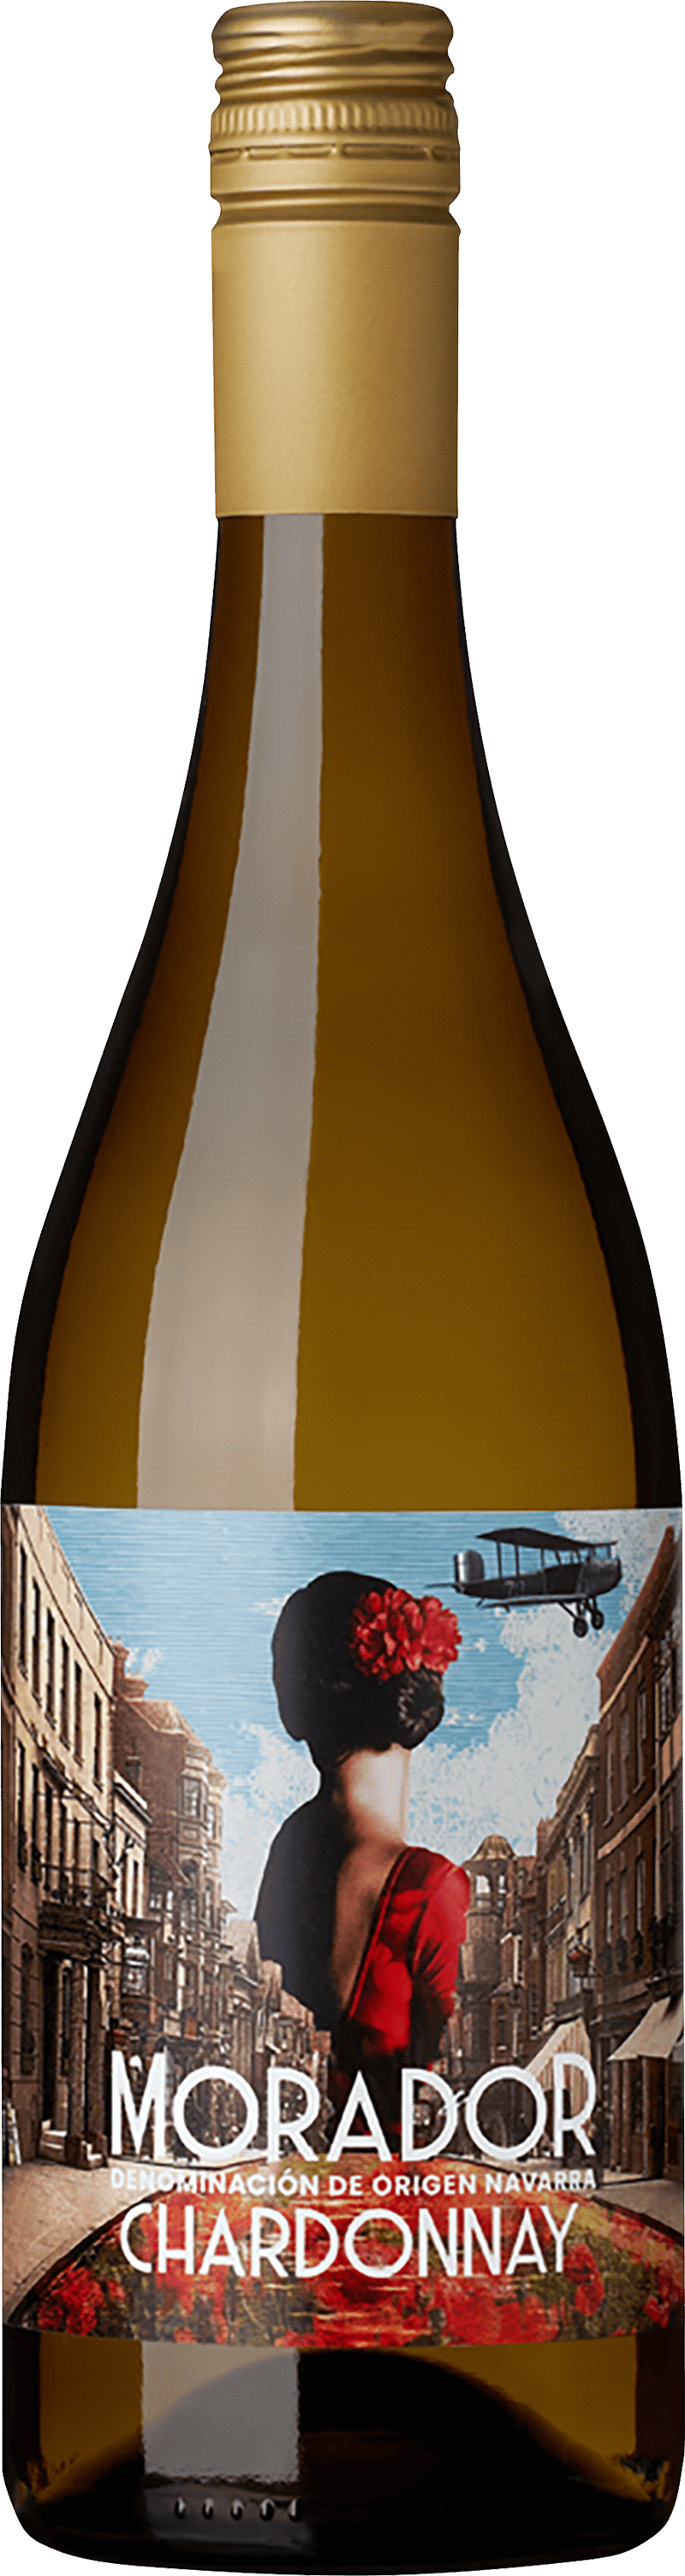 Morador Chardonnay 2018